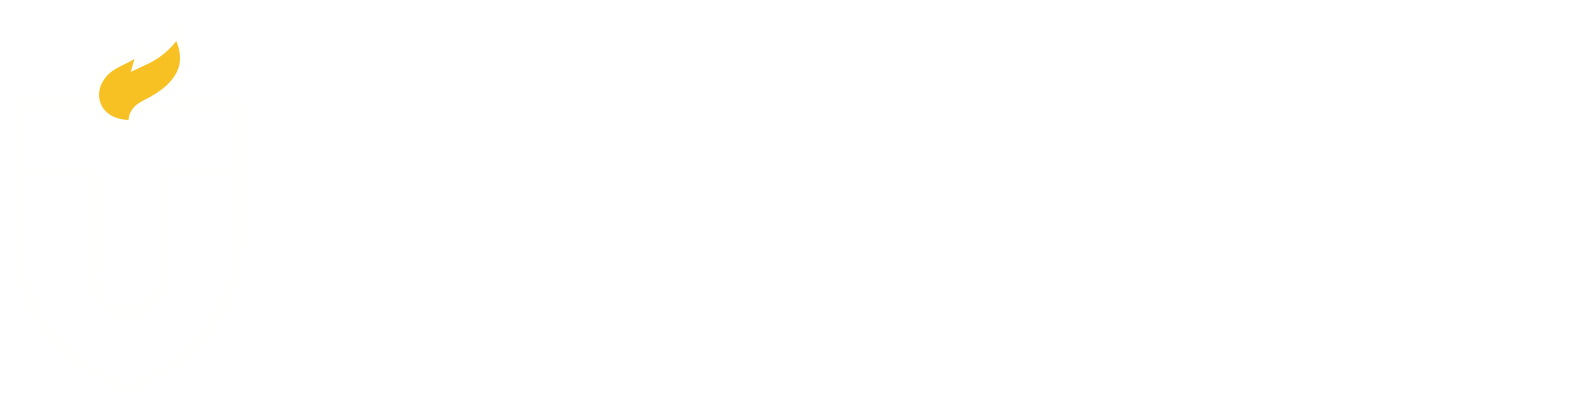 The School of Health Sciences